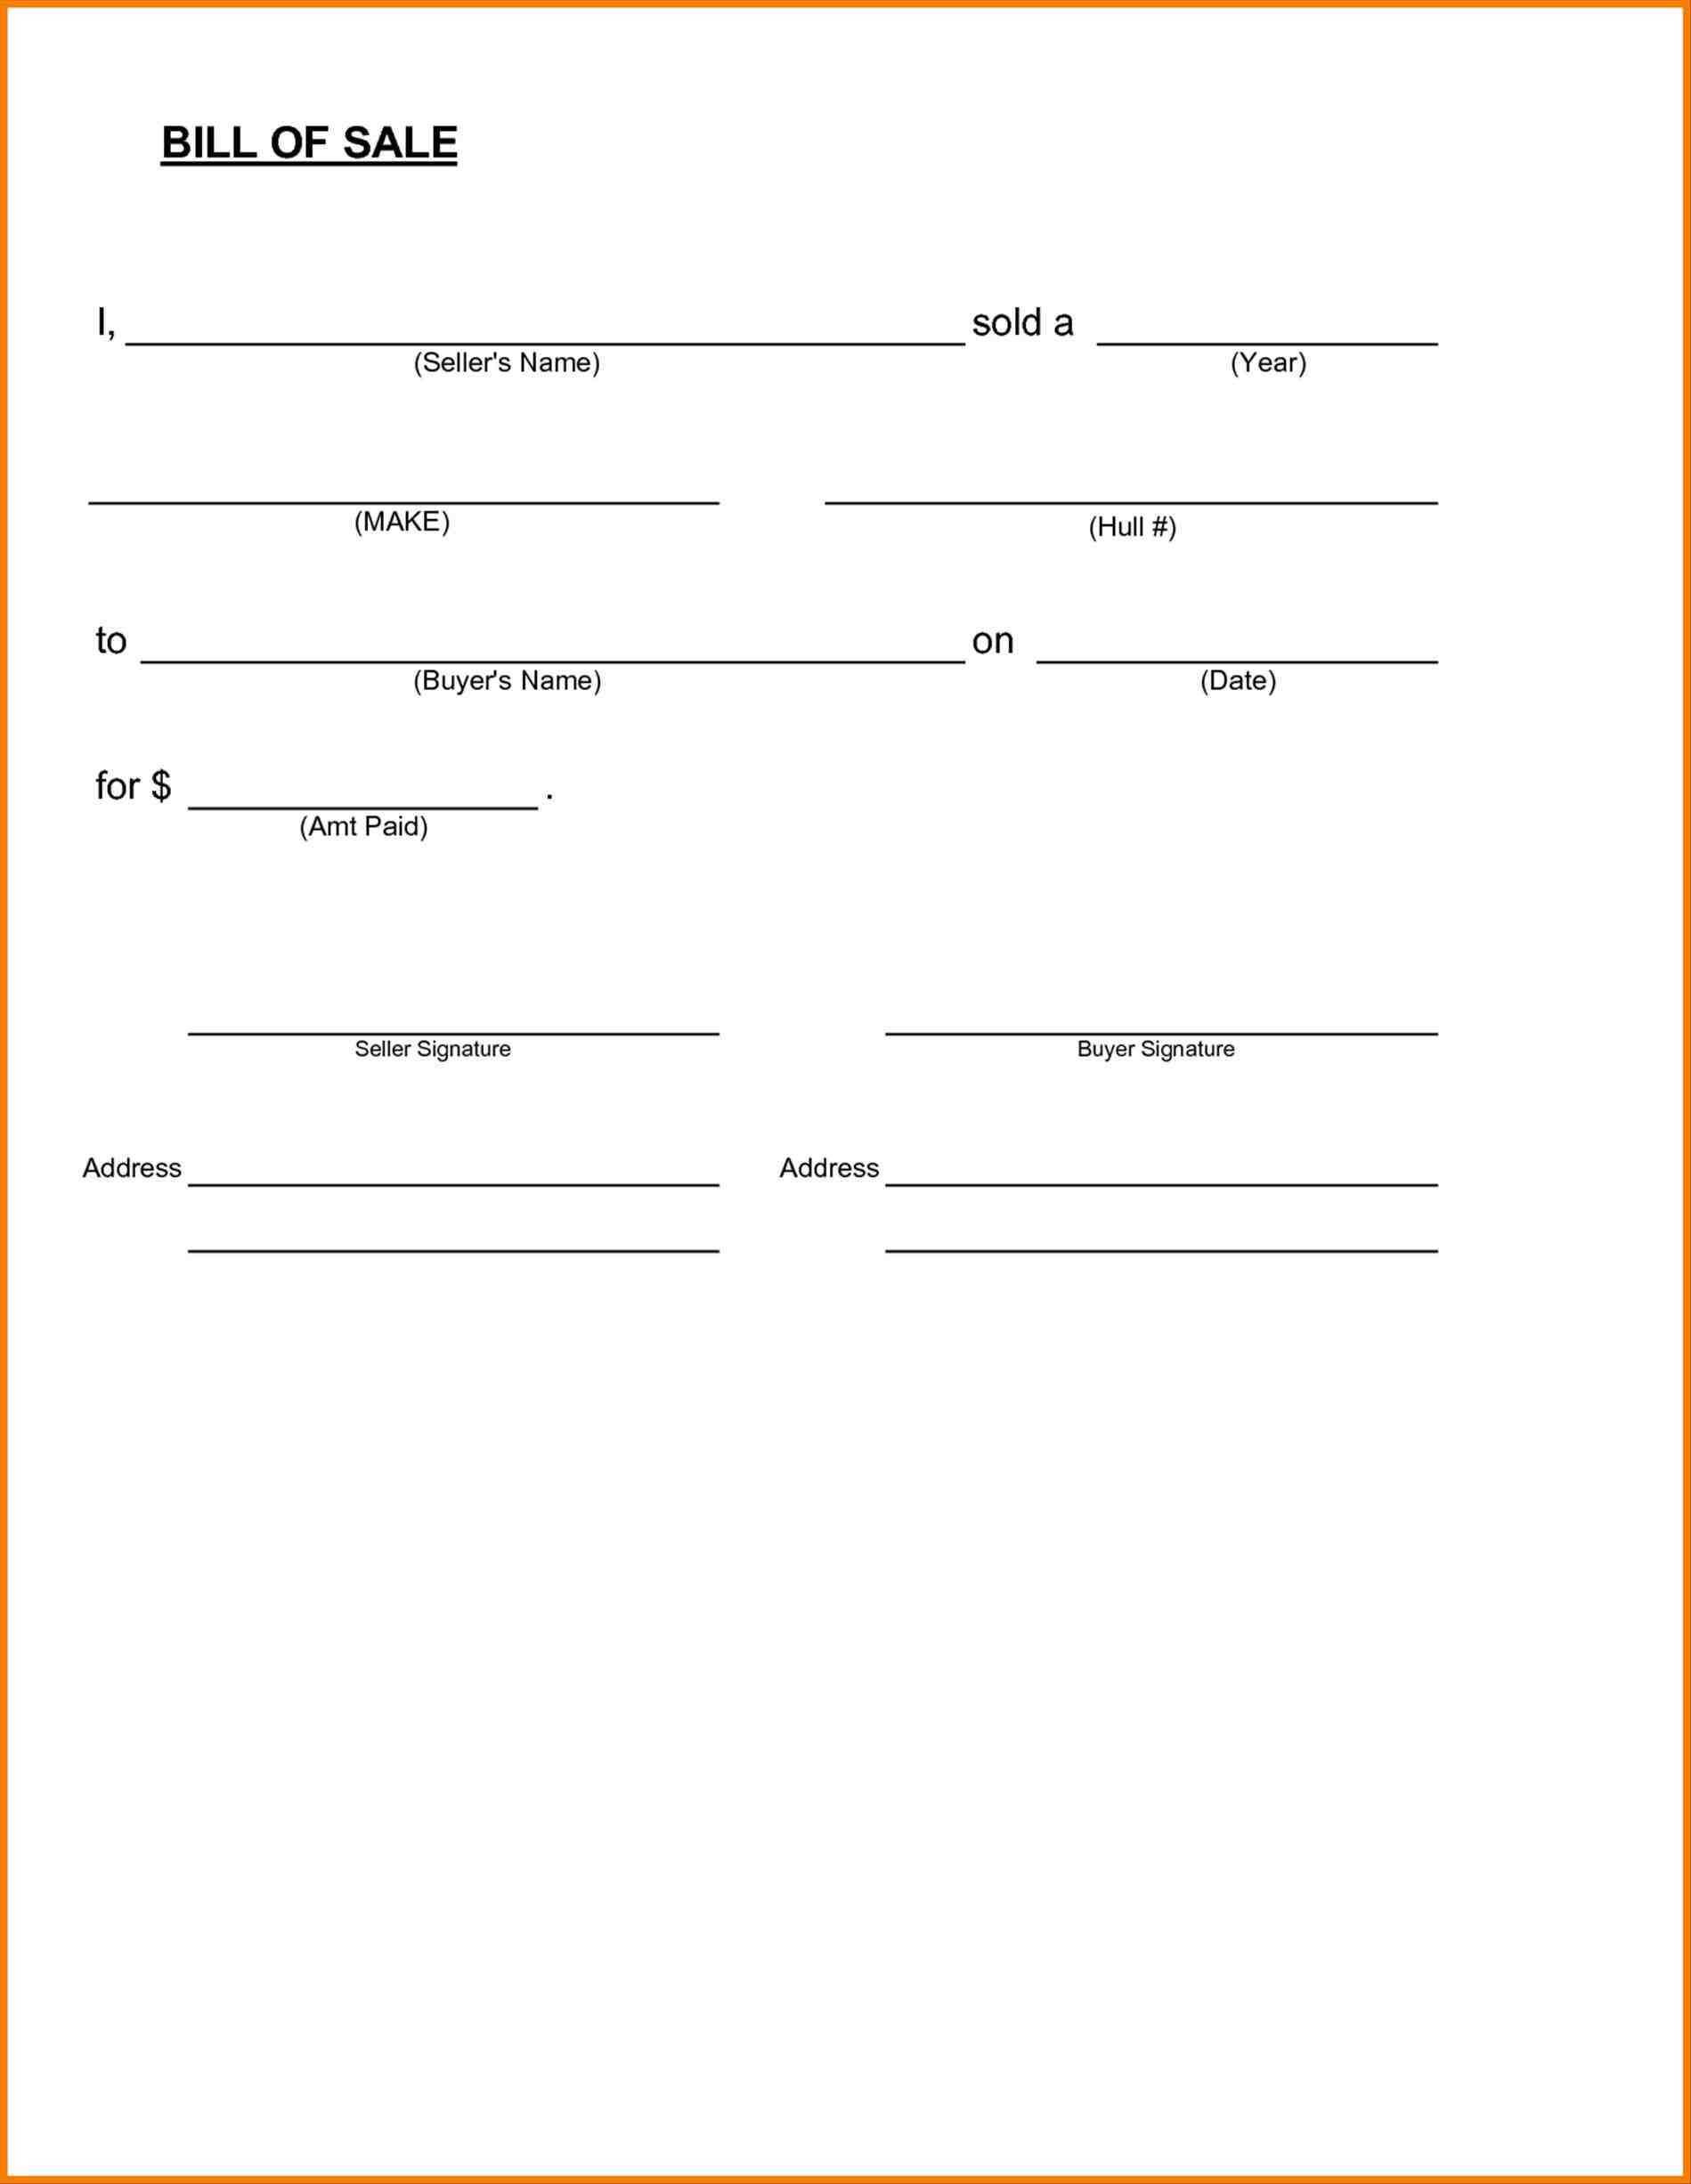 Sample Blank Printable Bill of Sale For Car in PDF & Word